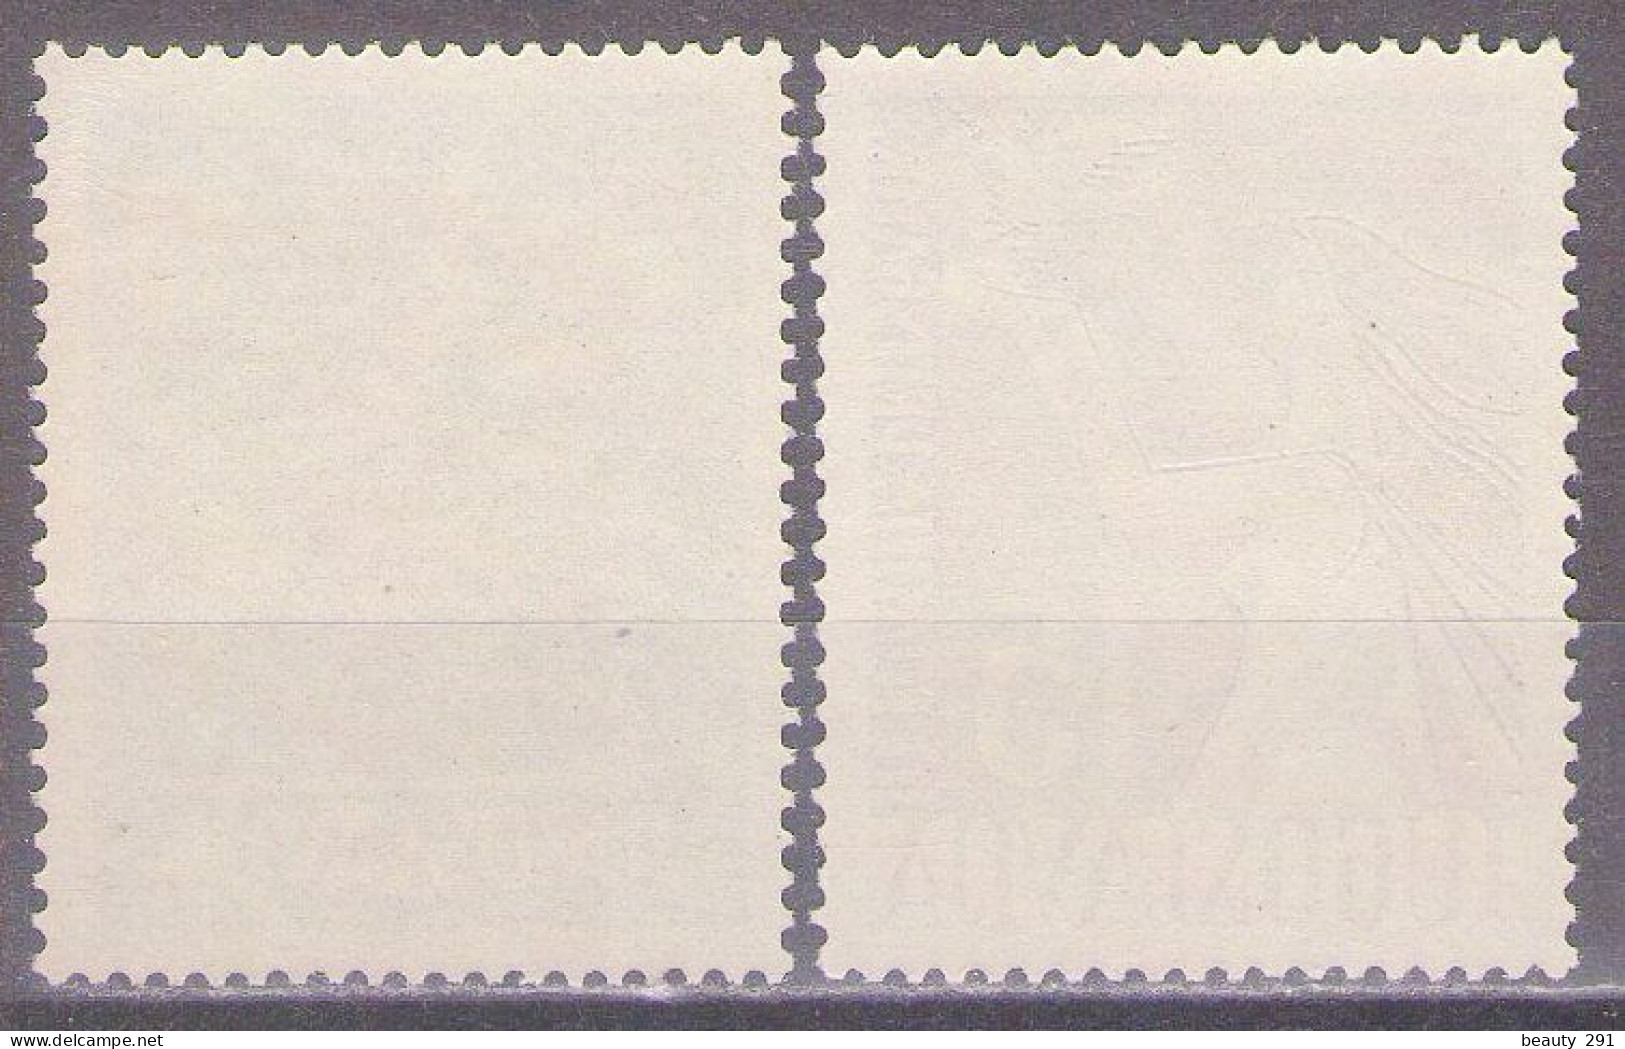 Yugoslavia 1955 - 10th Anniversary Of United Nations,10th Anniversary Of The Republic - Mi 774,775 - MNH**VF - Unused Stamps